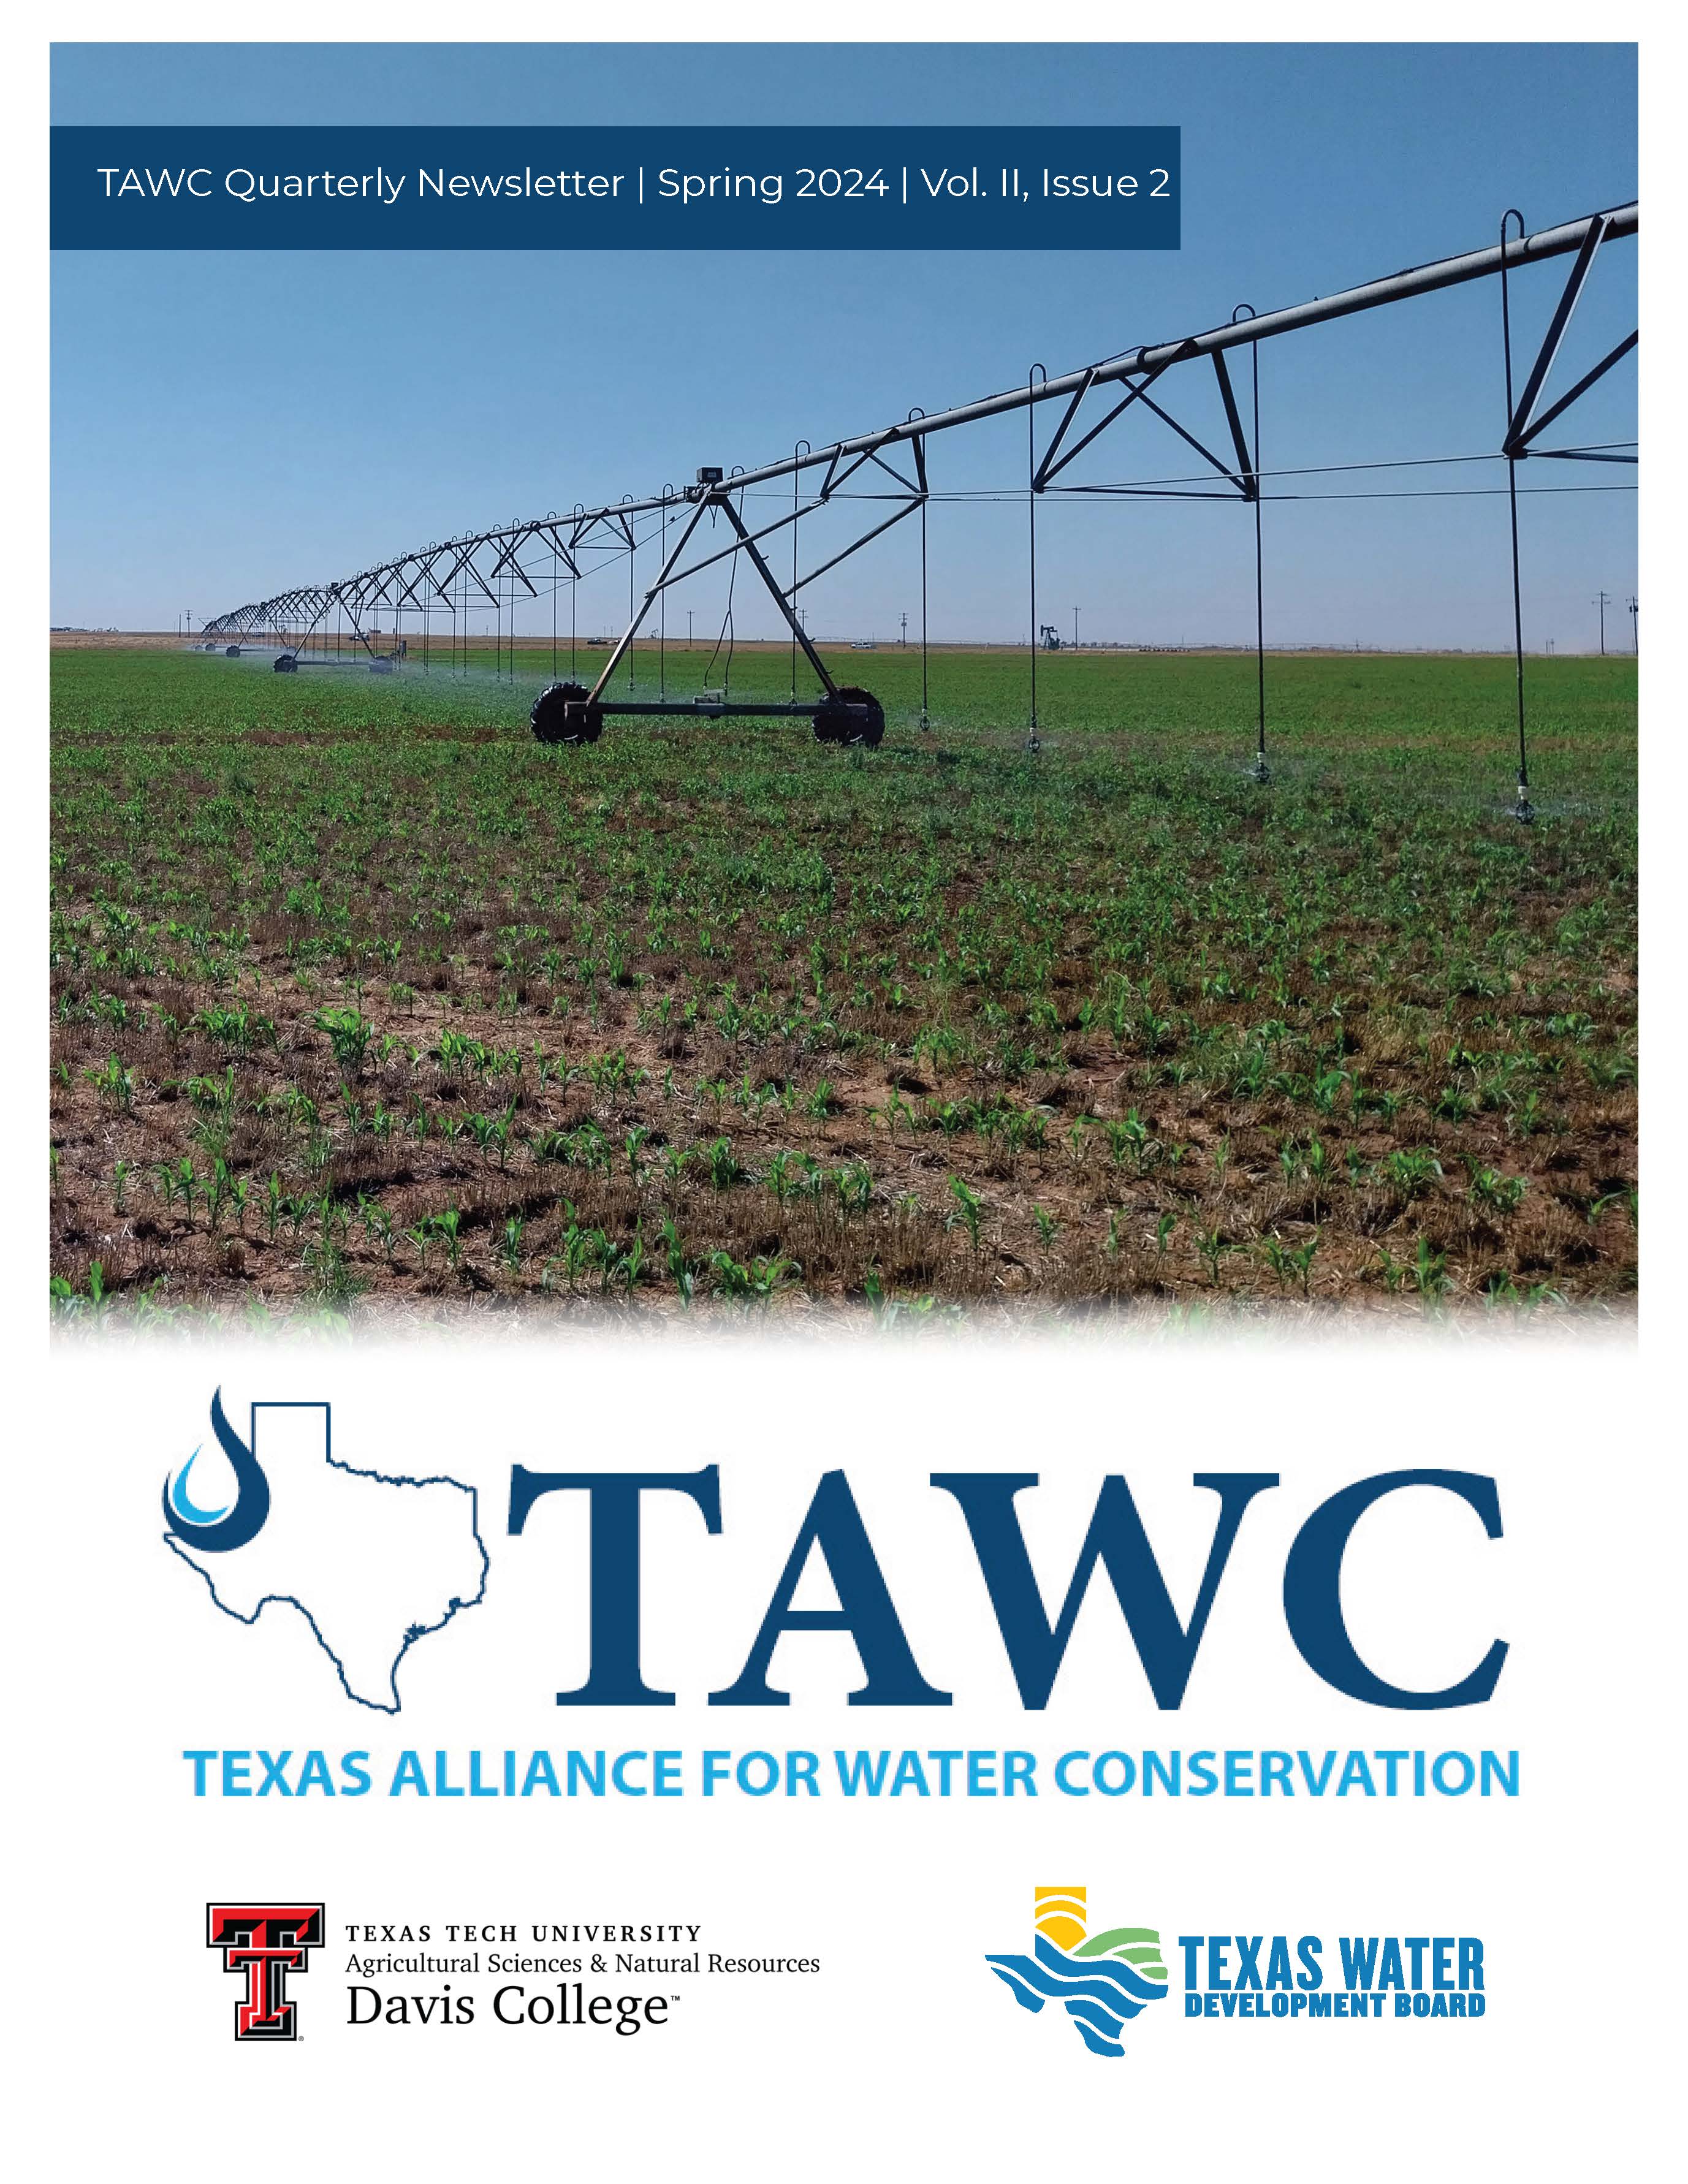 TAWC Newsletter